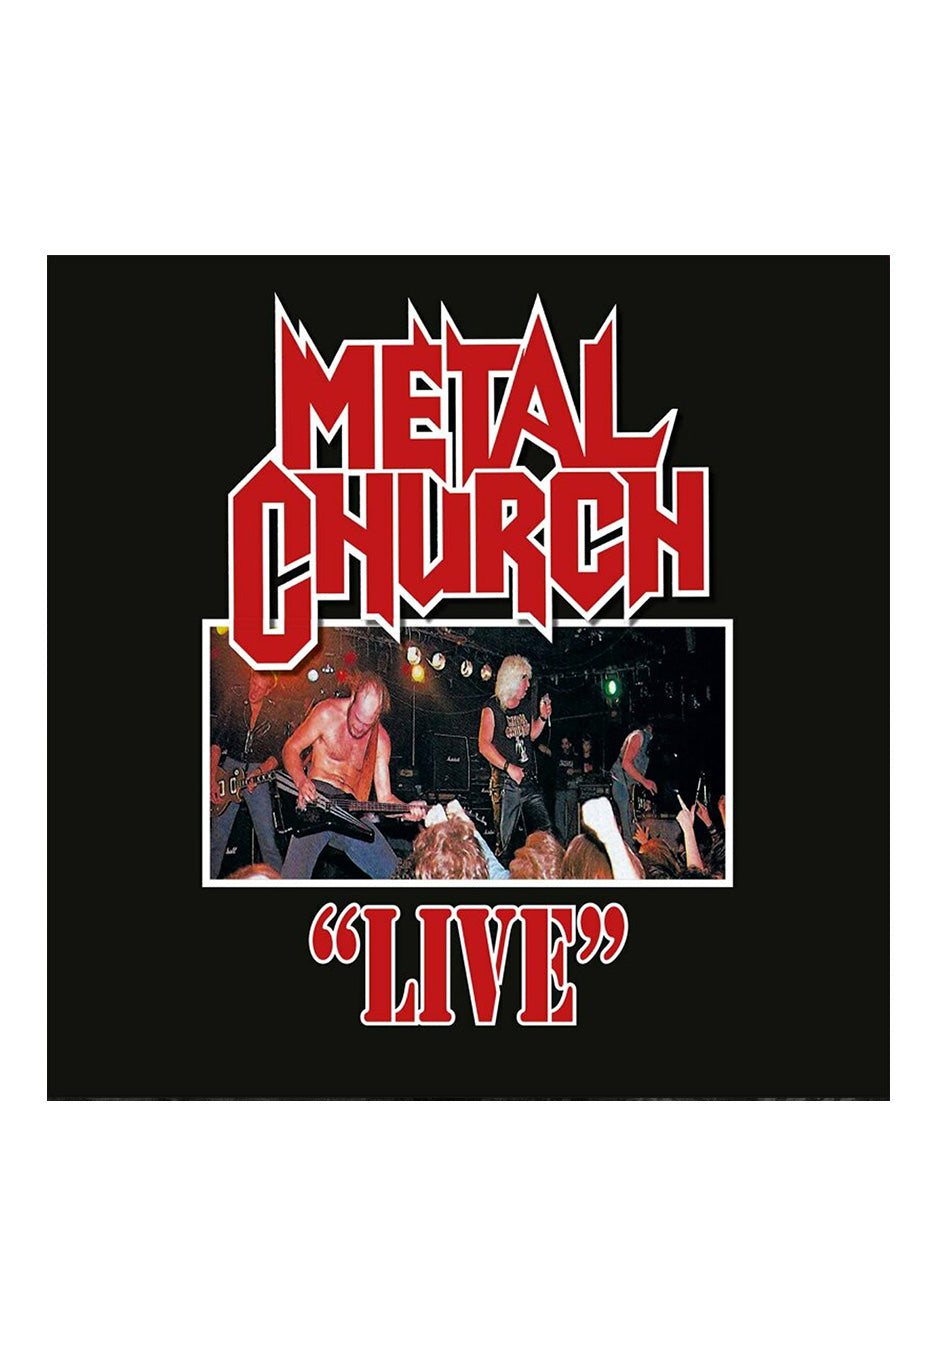 Metal Church - Live (Ltd.) - Vinyl